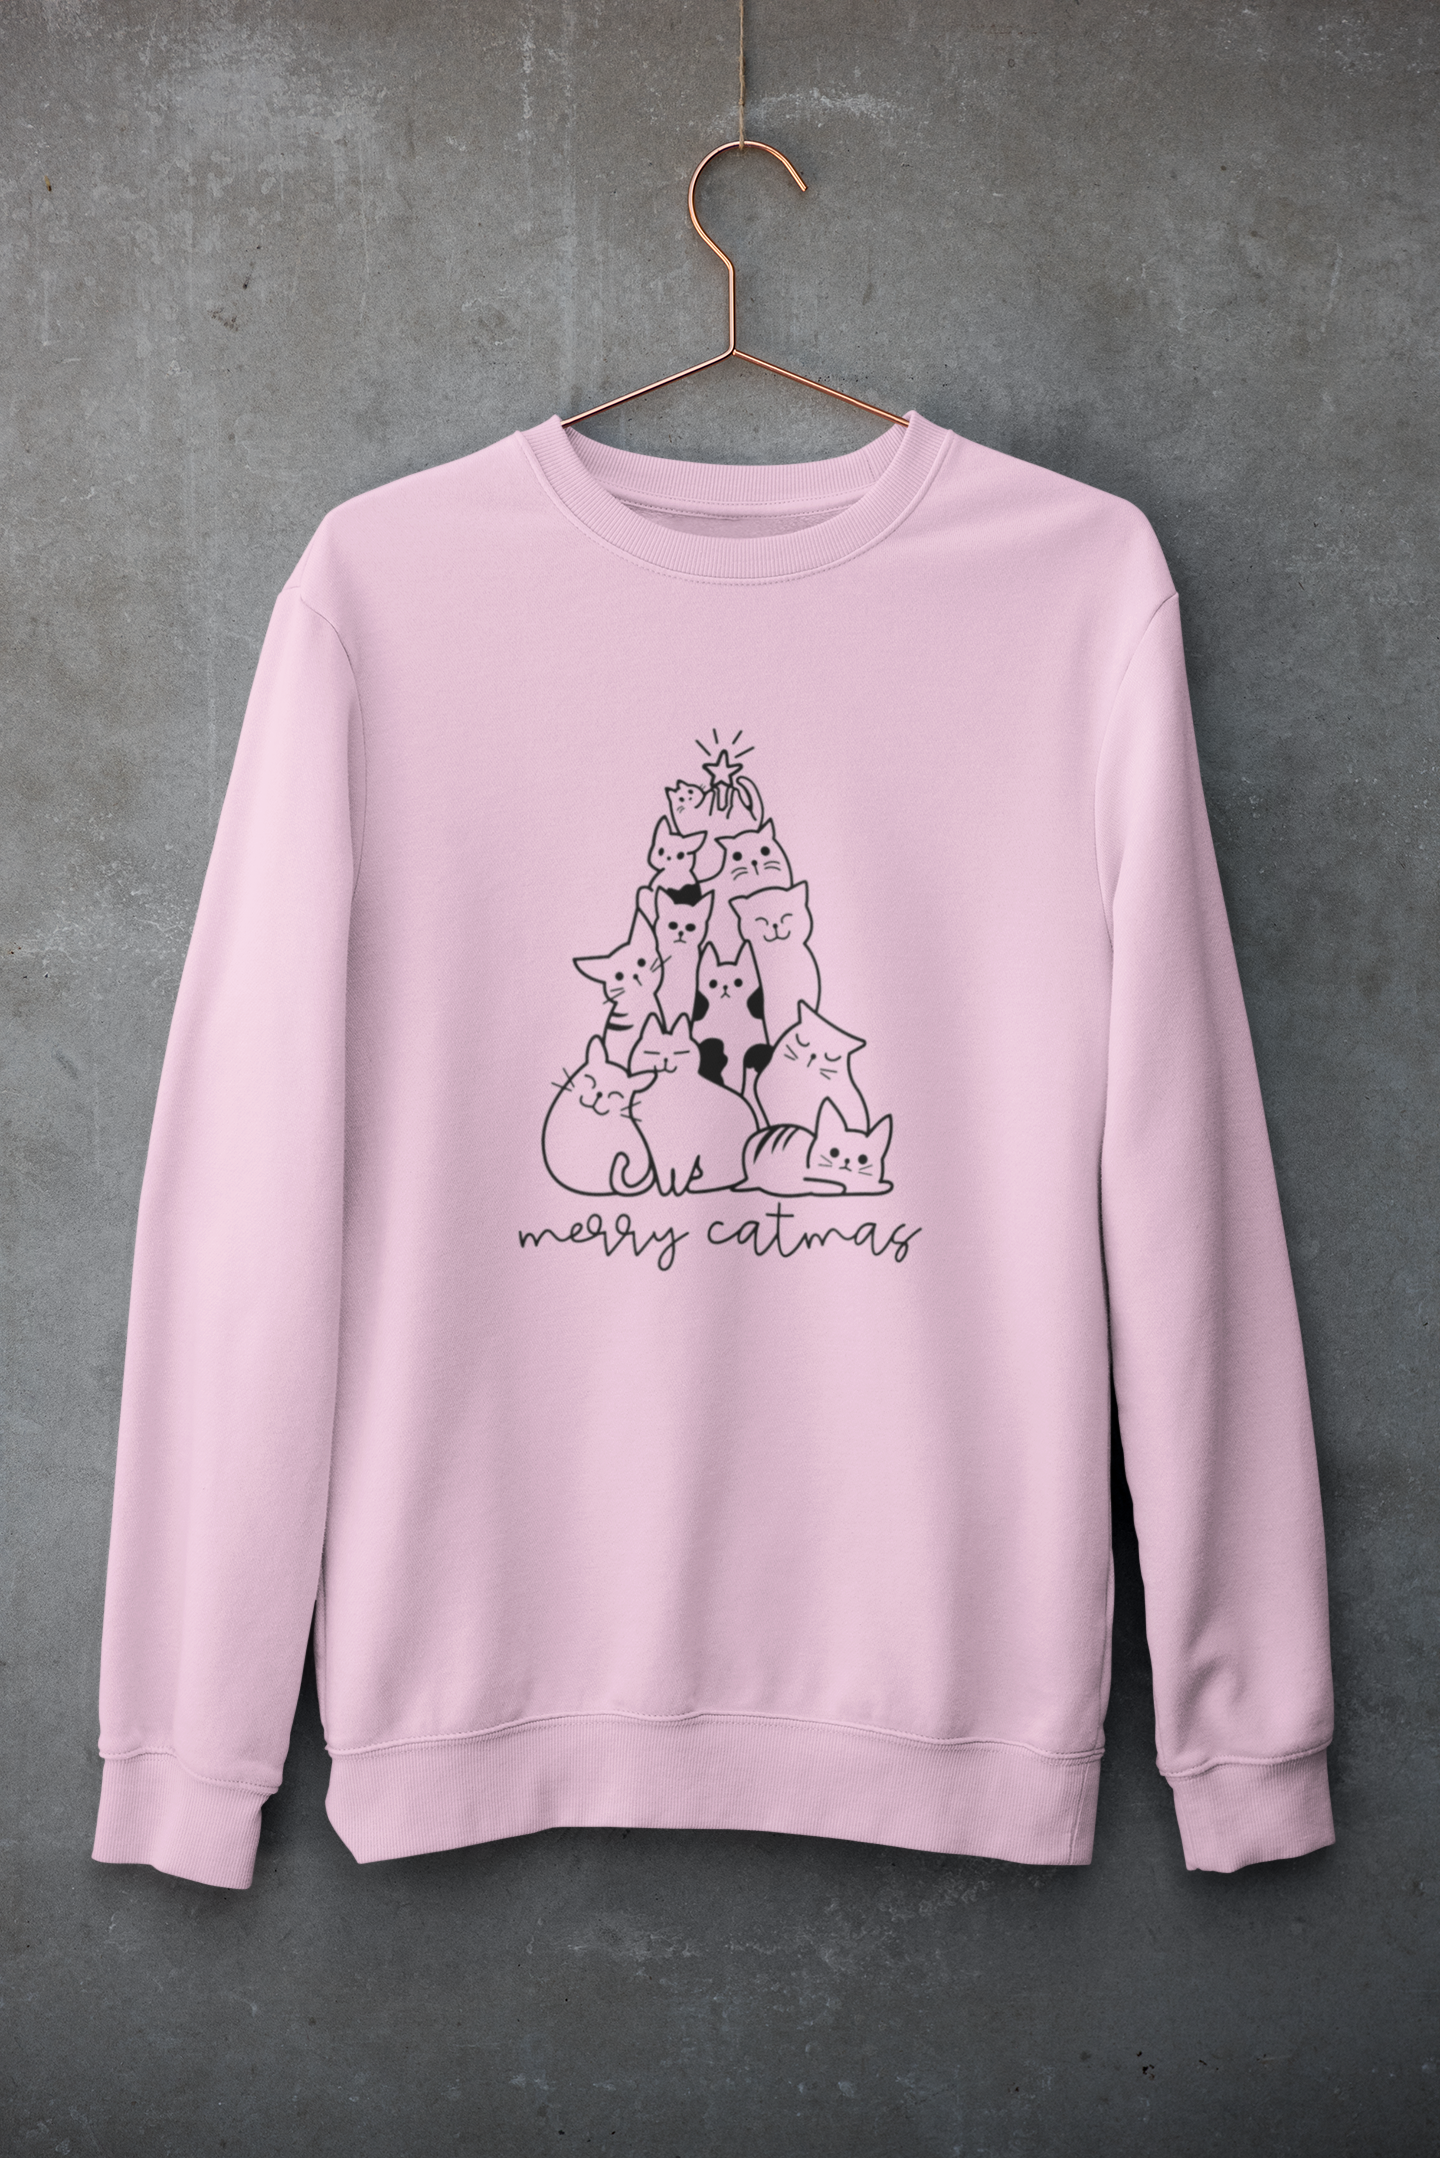 Merry Catmas | Christmas | Sweatshirt